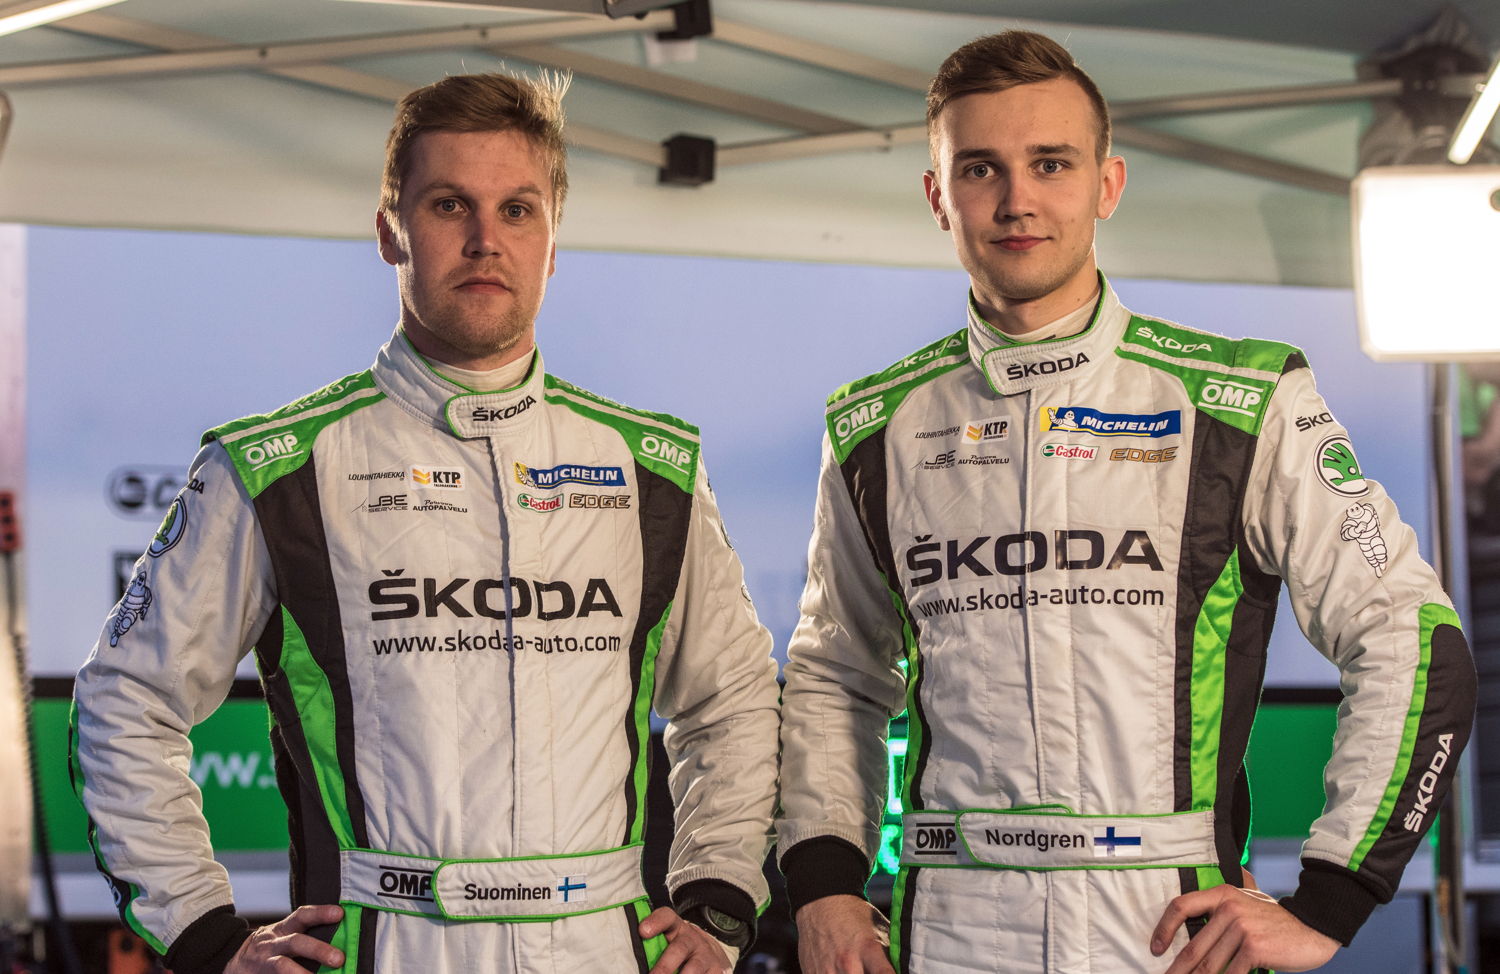 Finnish ŠKODA juniors Juuso Nordgren and Tapio
Suominen are making their 2018 WRC 2 season debut on
board a ŠKODA FABIA R5.